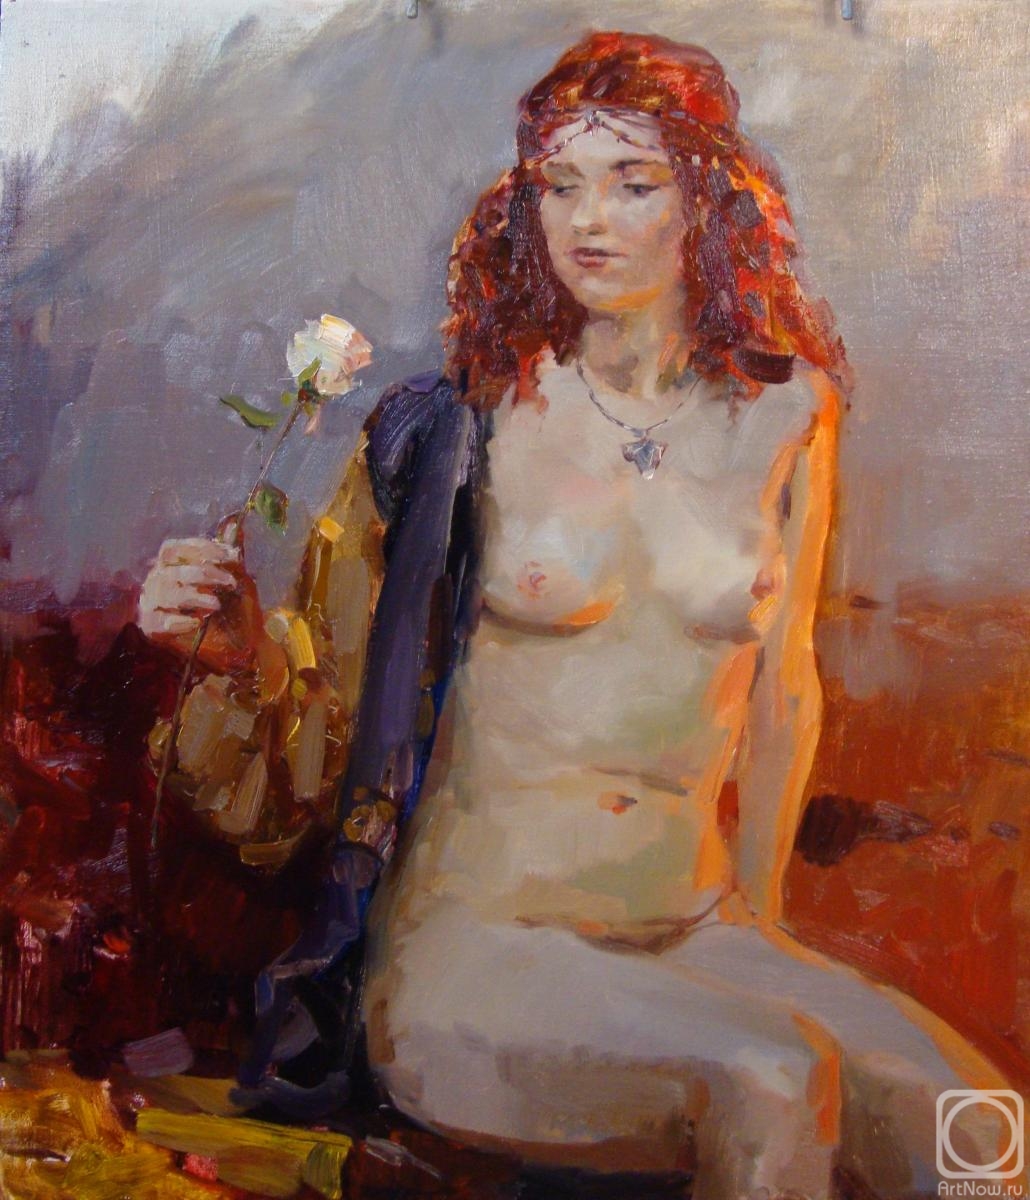 Katyshev Anton. The girl with the rose